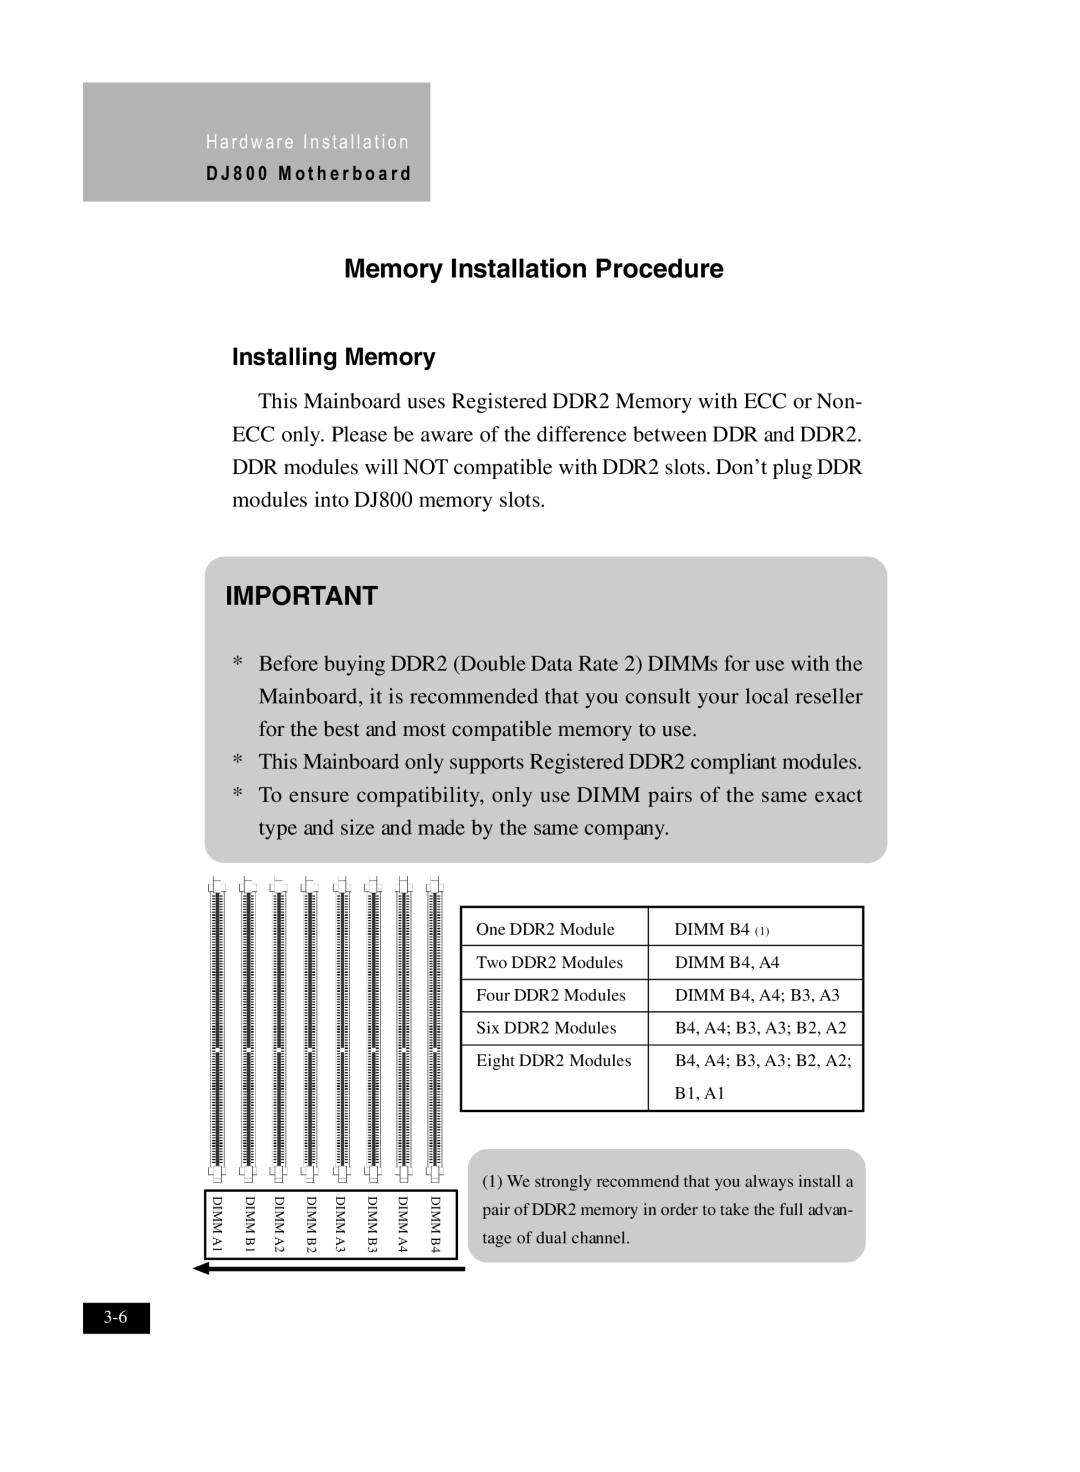 IBM DJ800 user manual Memory Installation Procedure, Installing Memory 